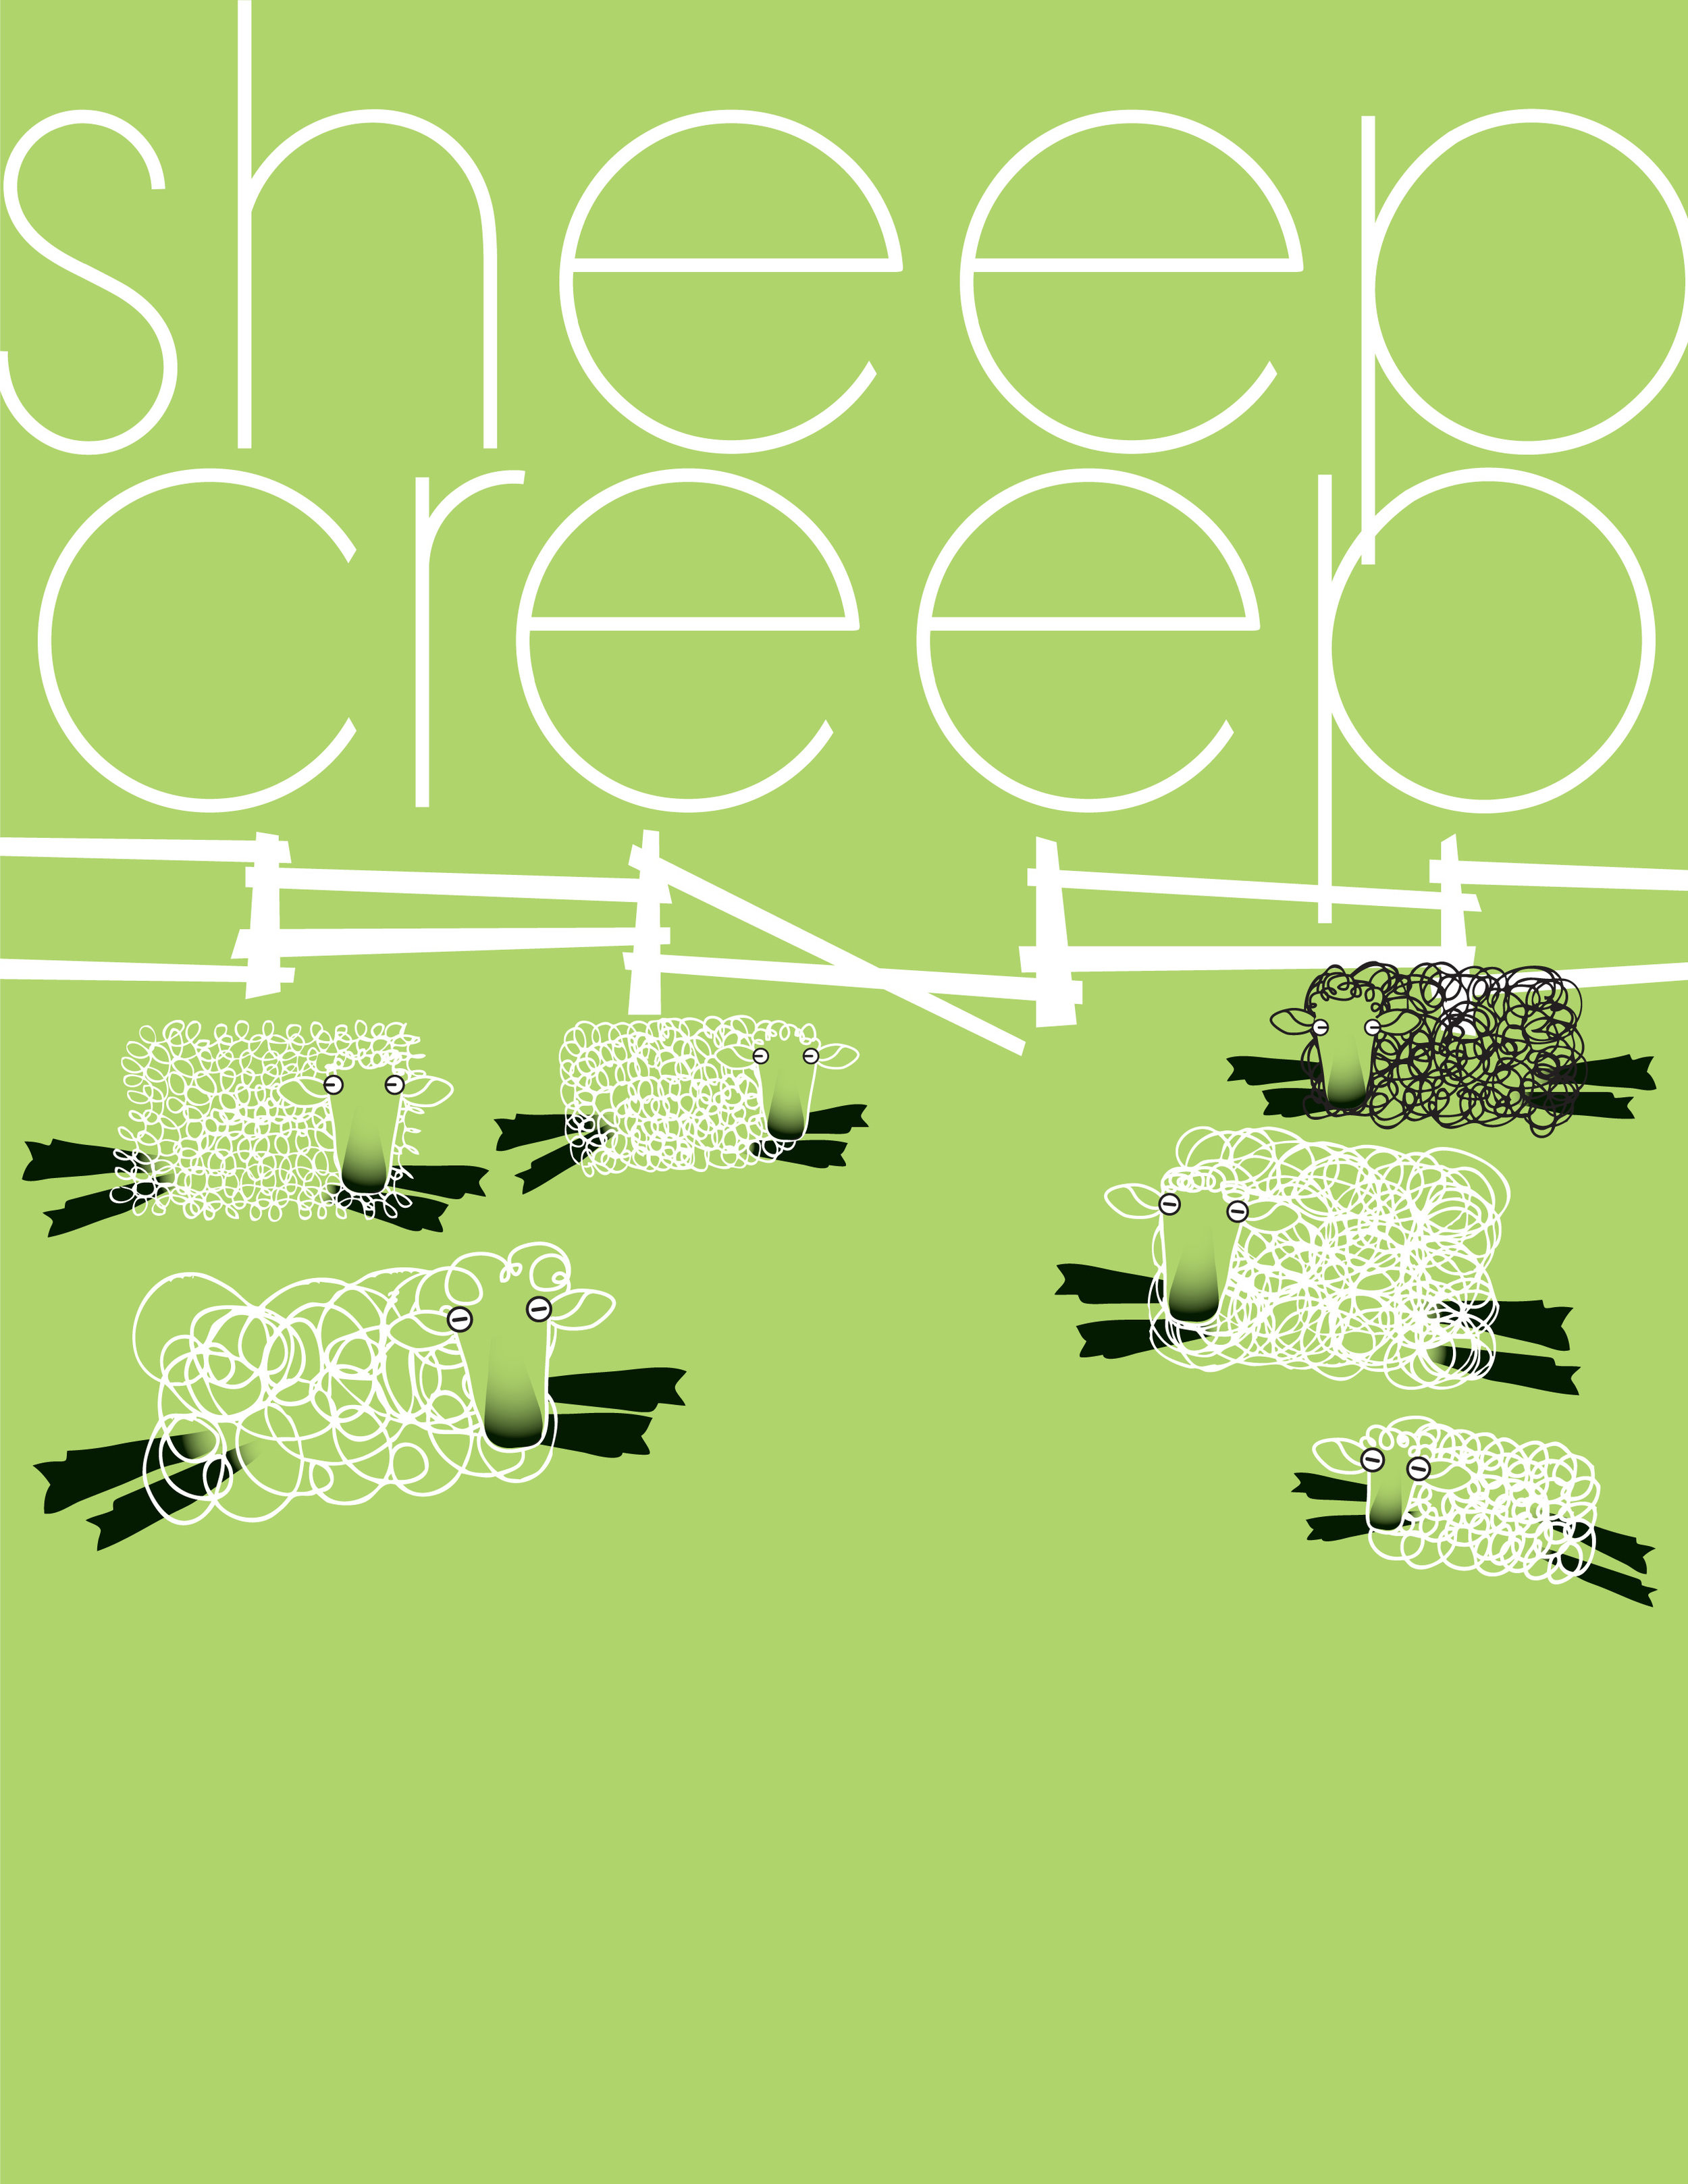 Sheep Sleep Book 2-4.jpg